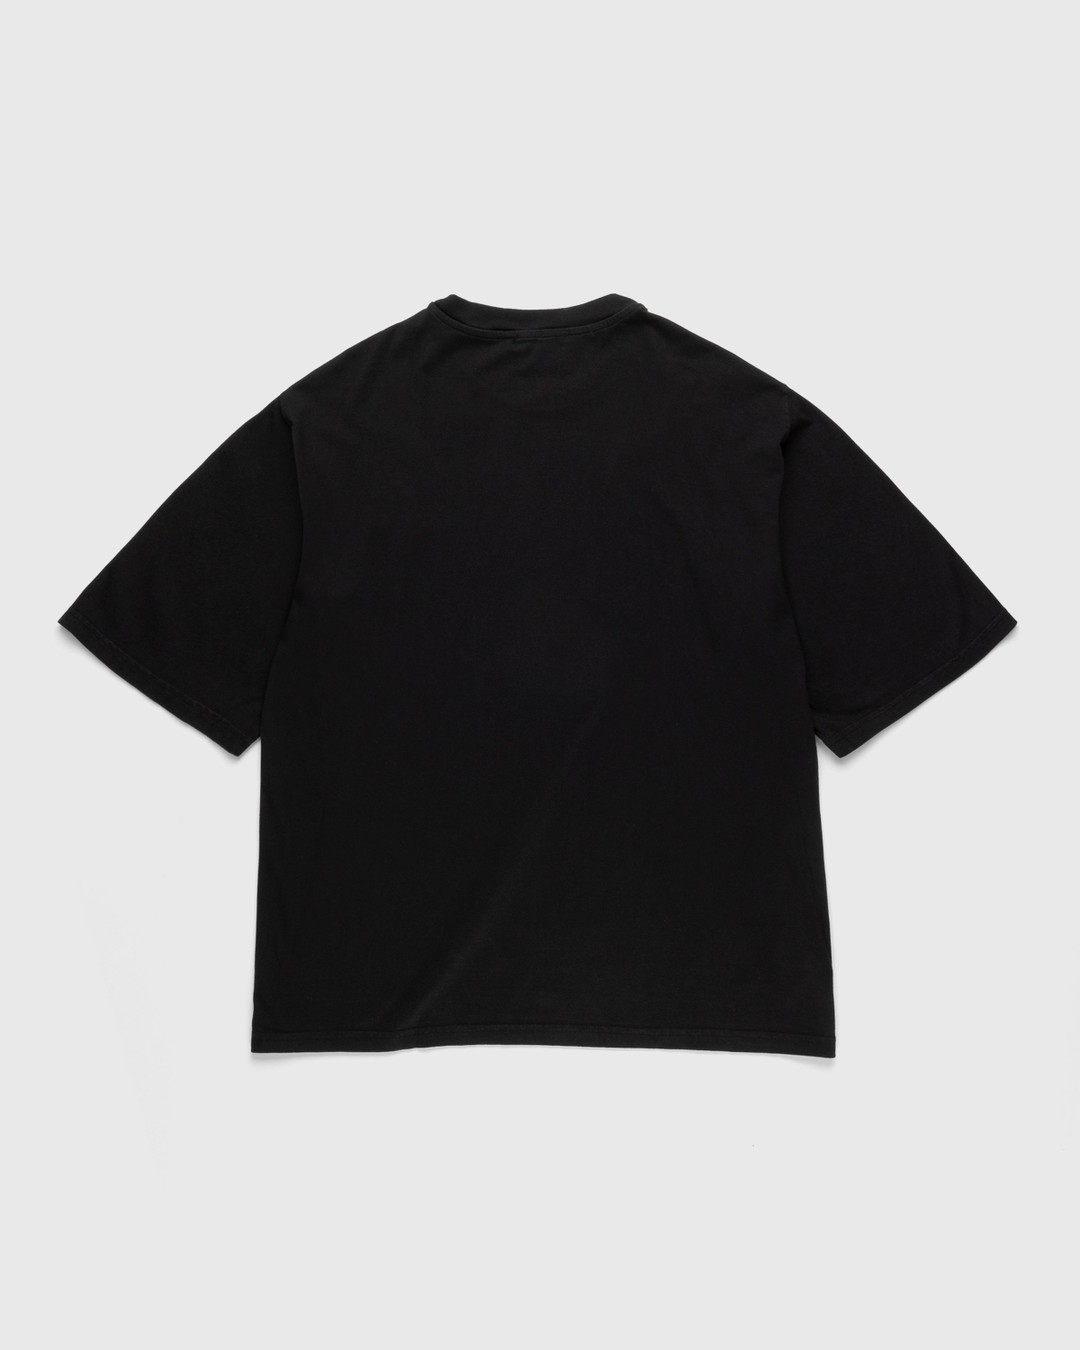 Lourdes New York – Logo Tee Black - T-shirts - Black - Image 2